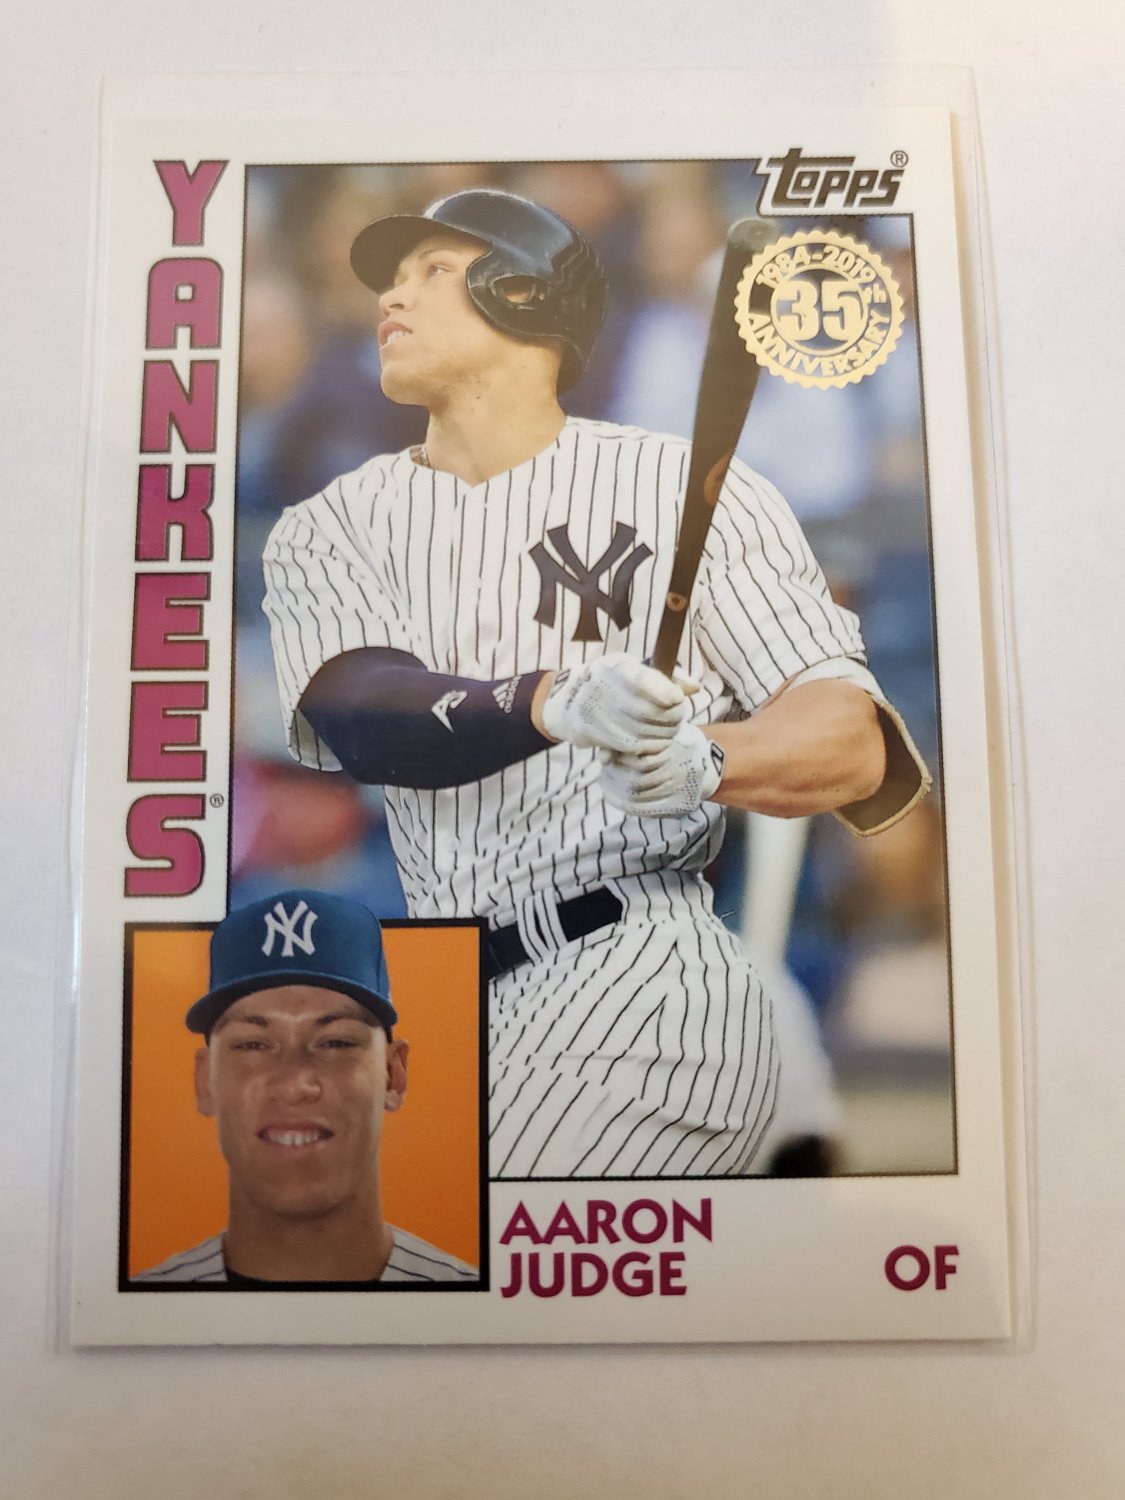 Aaron Judge 2020 Topps '84 Topps Insert Card